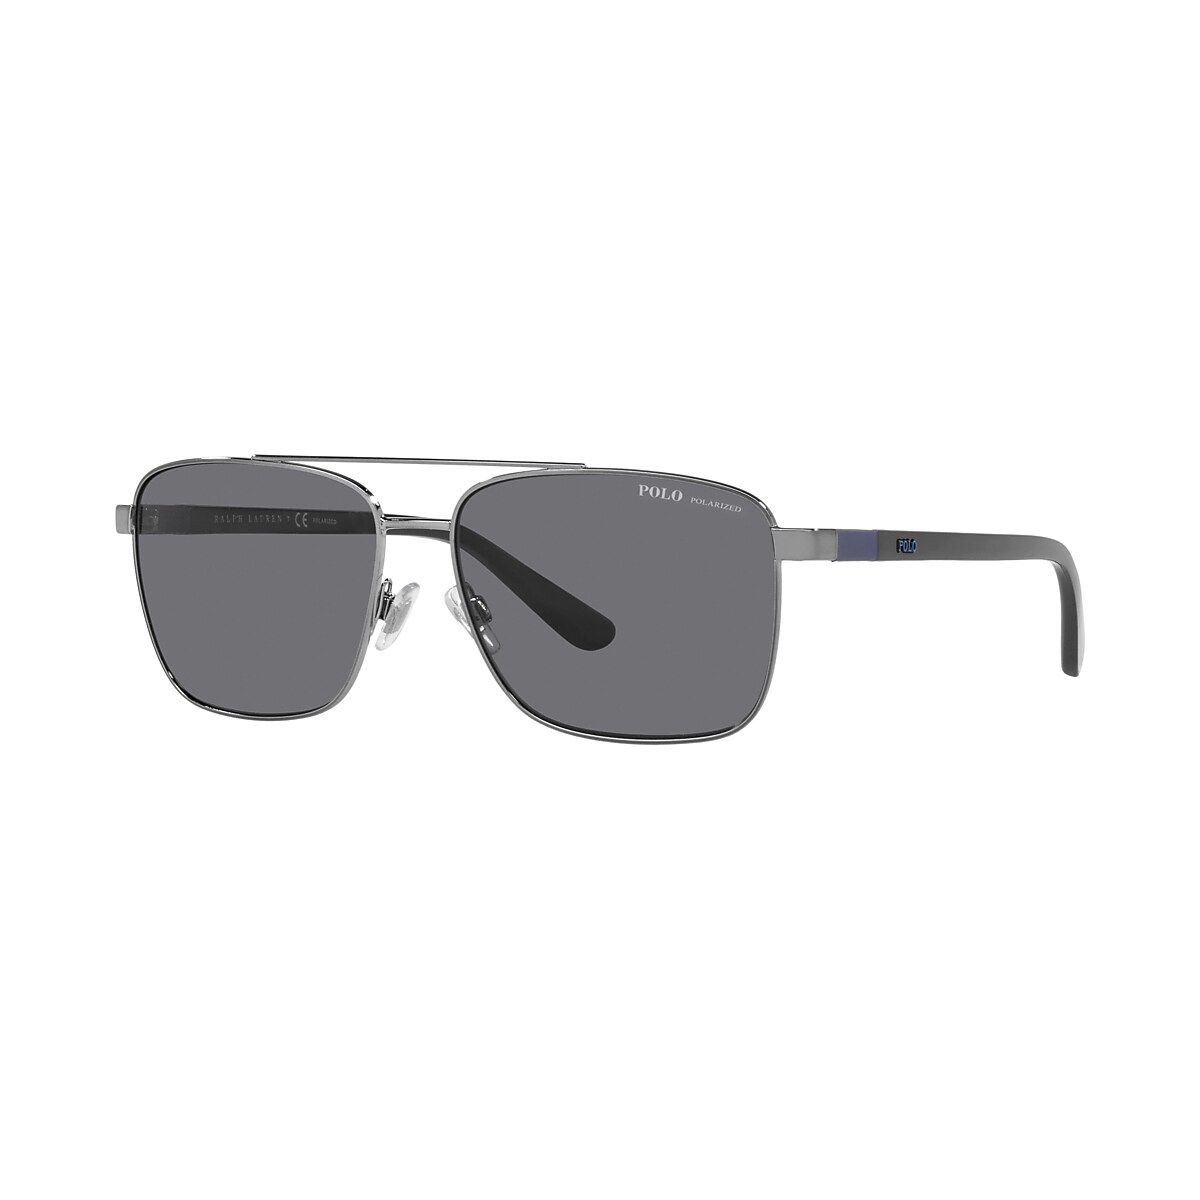 POLO RALPH LAUREN PH3137 Shiny Gunmetal - Men Sunglasses, Polarized Grey  Lens